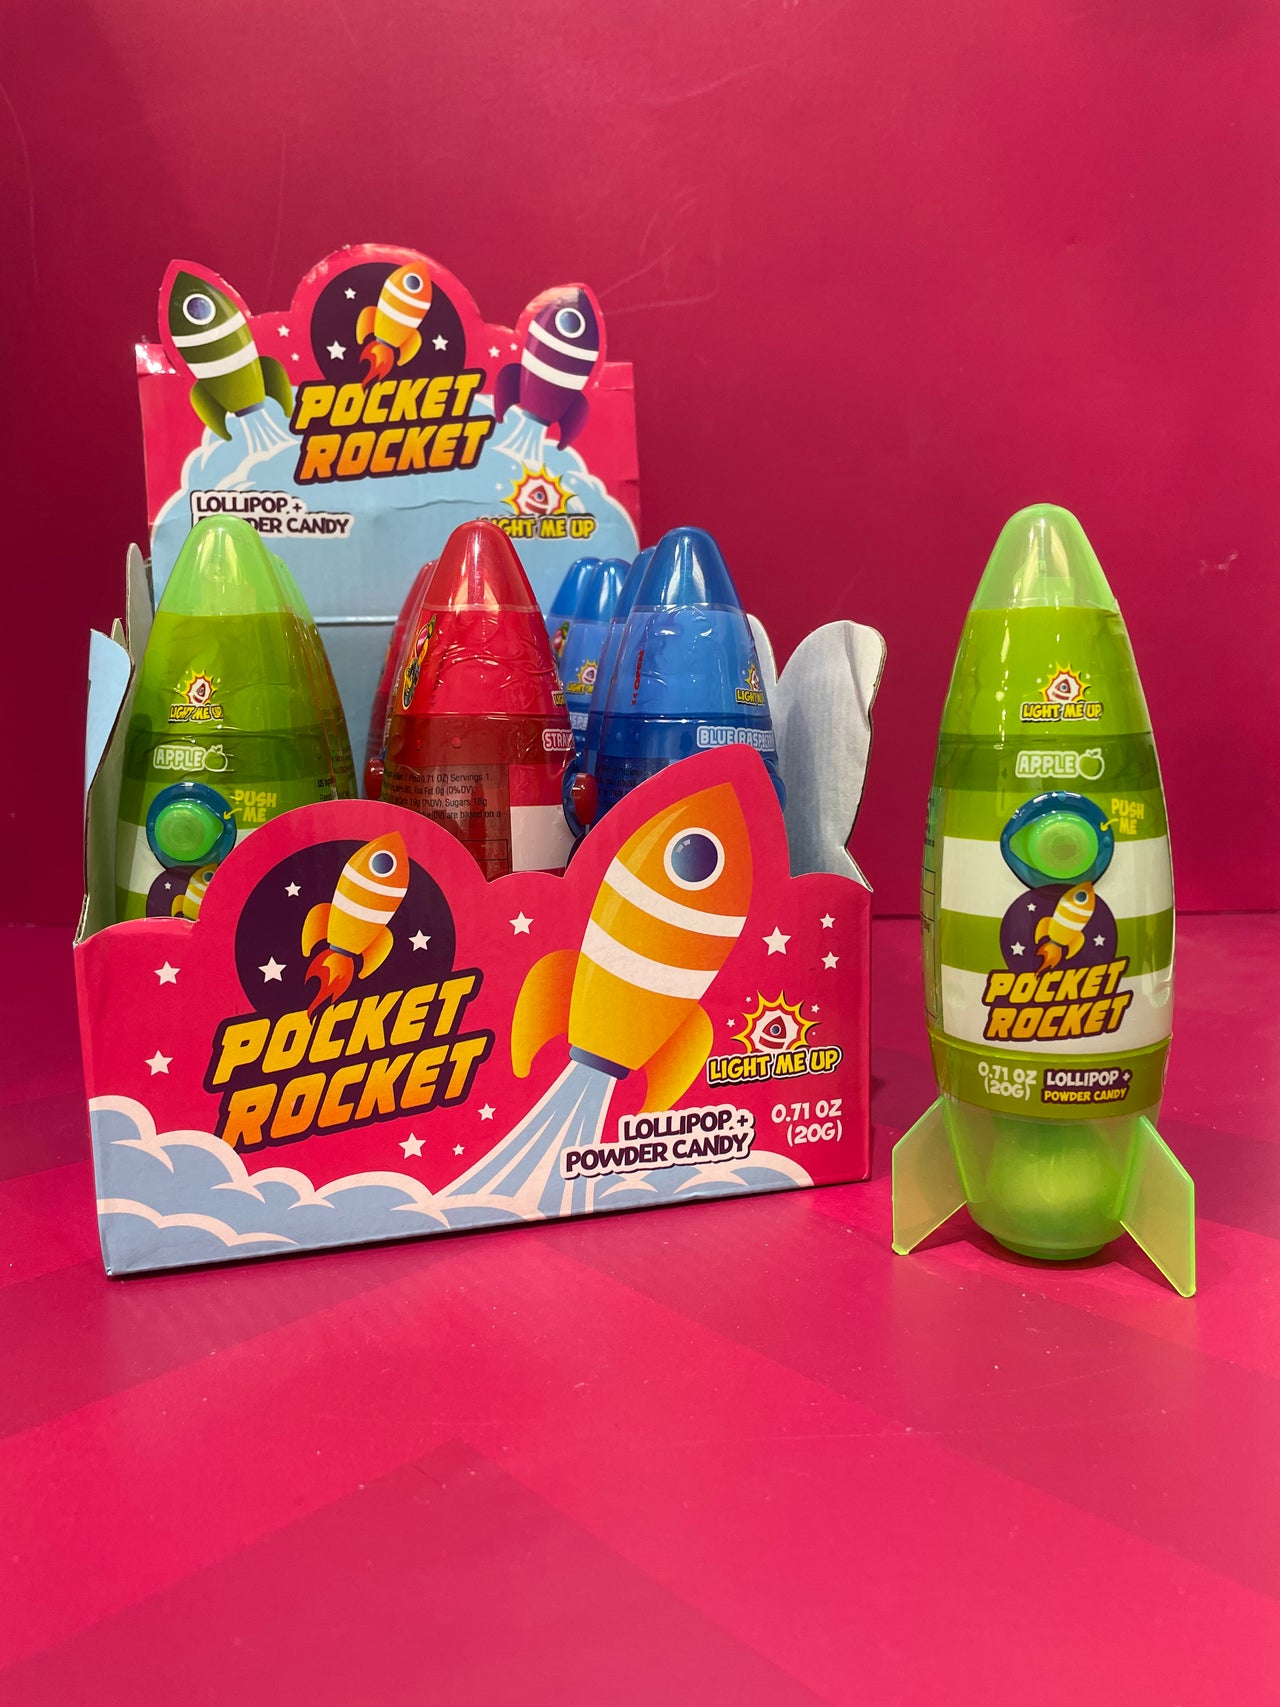 Pocket Rocket Lollipop+Powder Candy